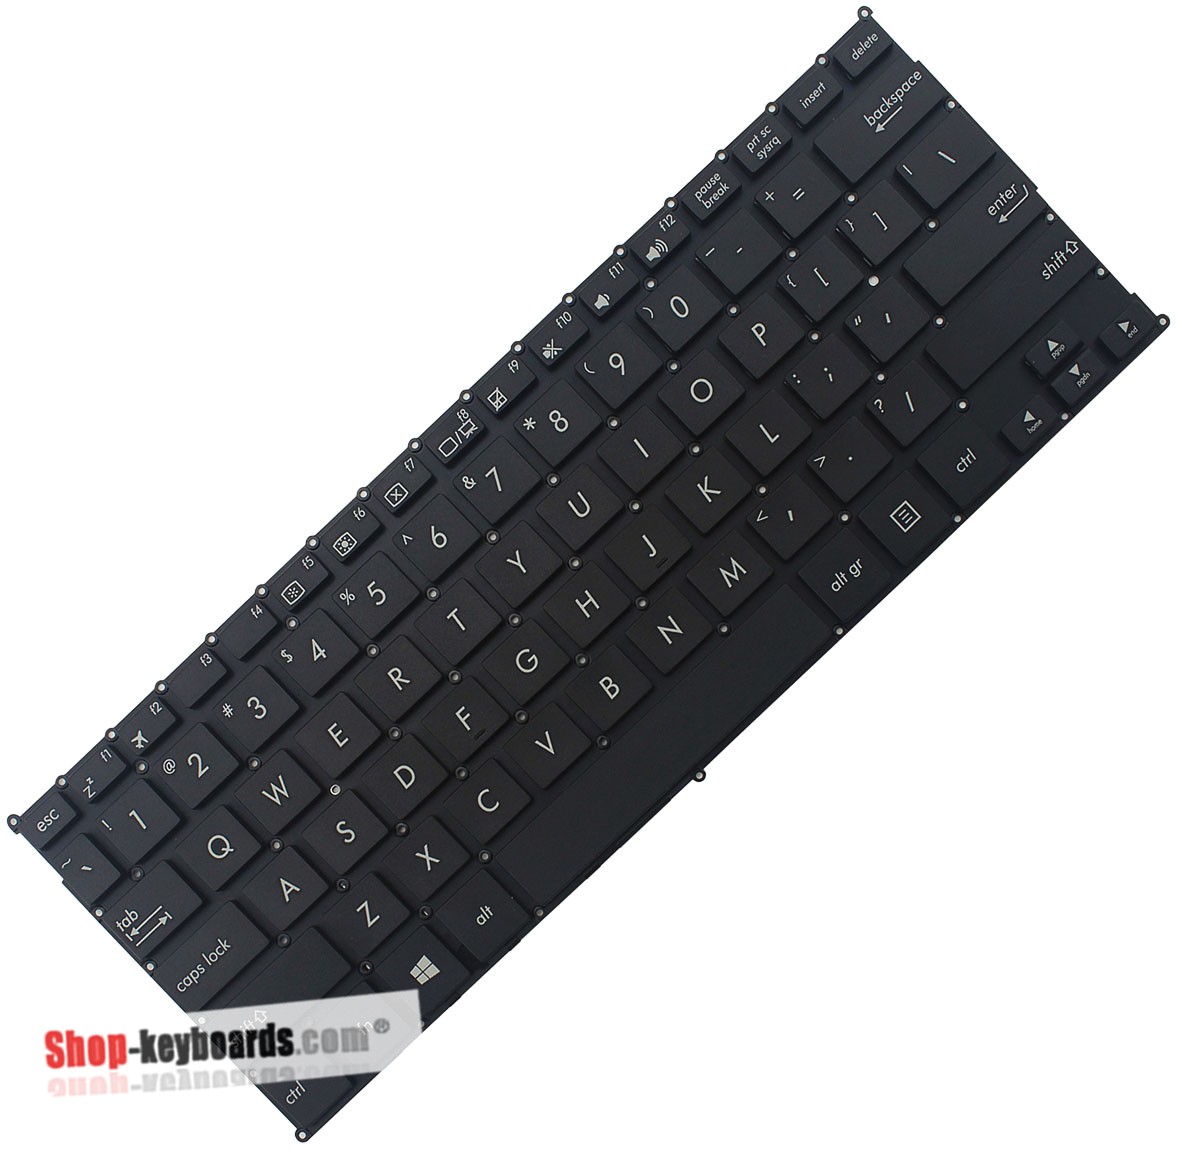 Asus 0KNL0-1122UI00 Keyboard replacement